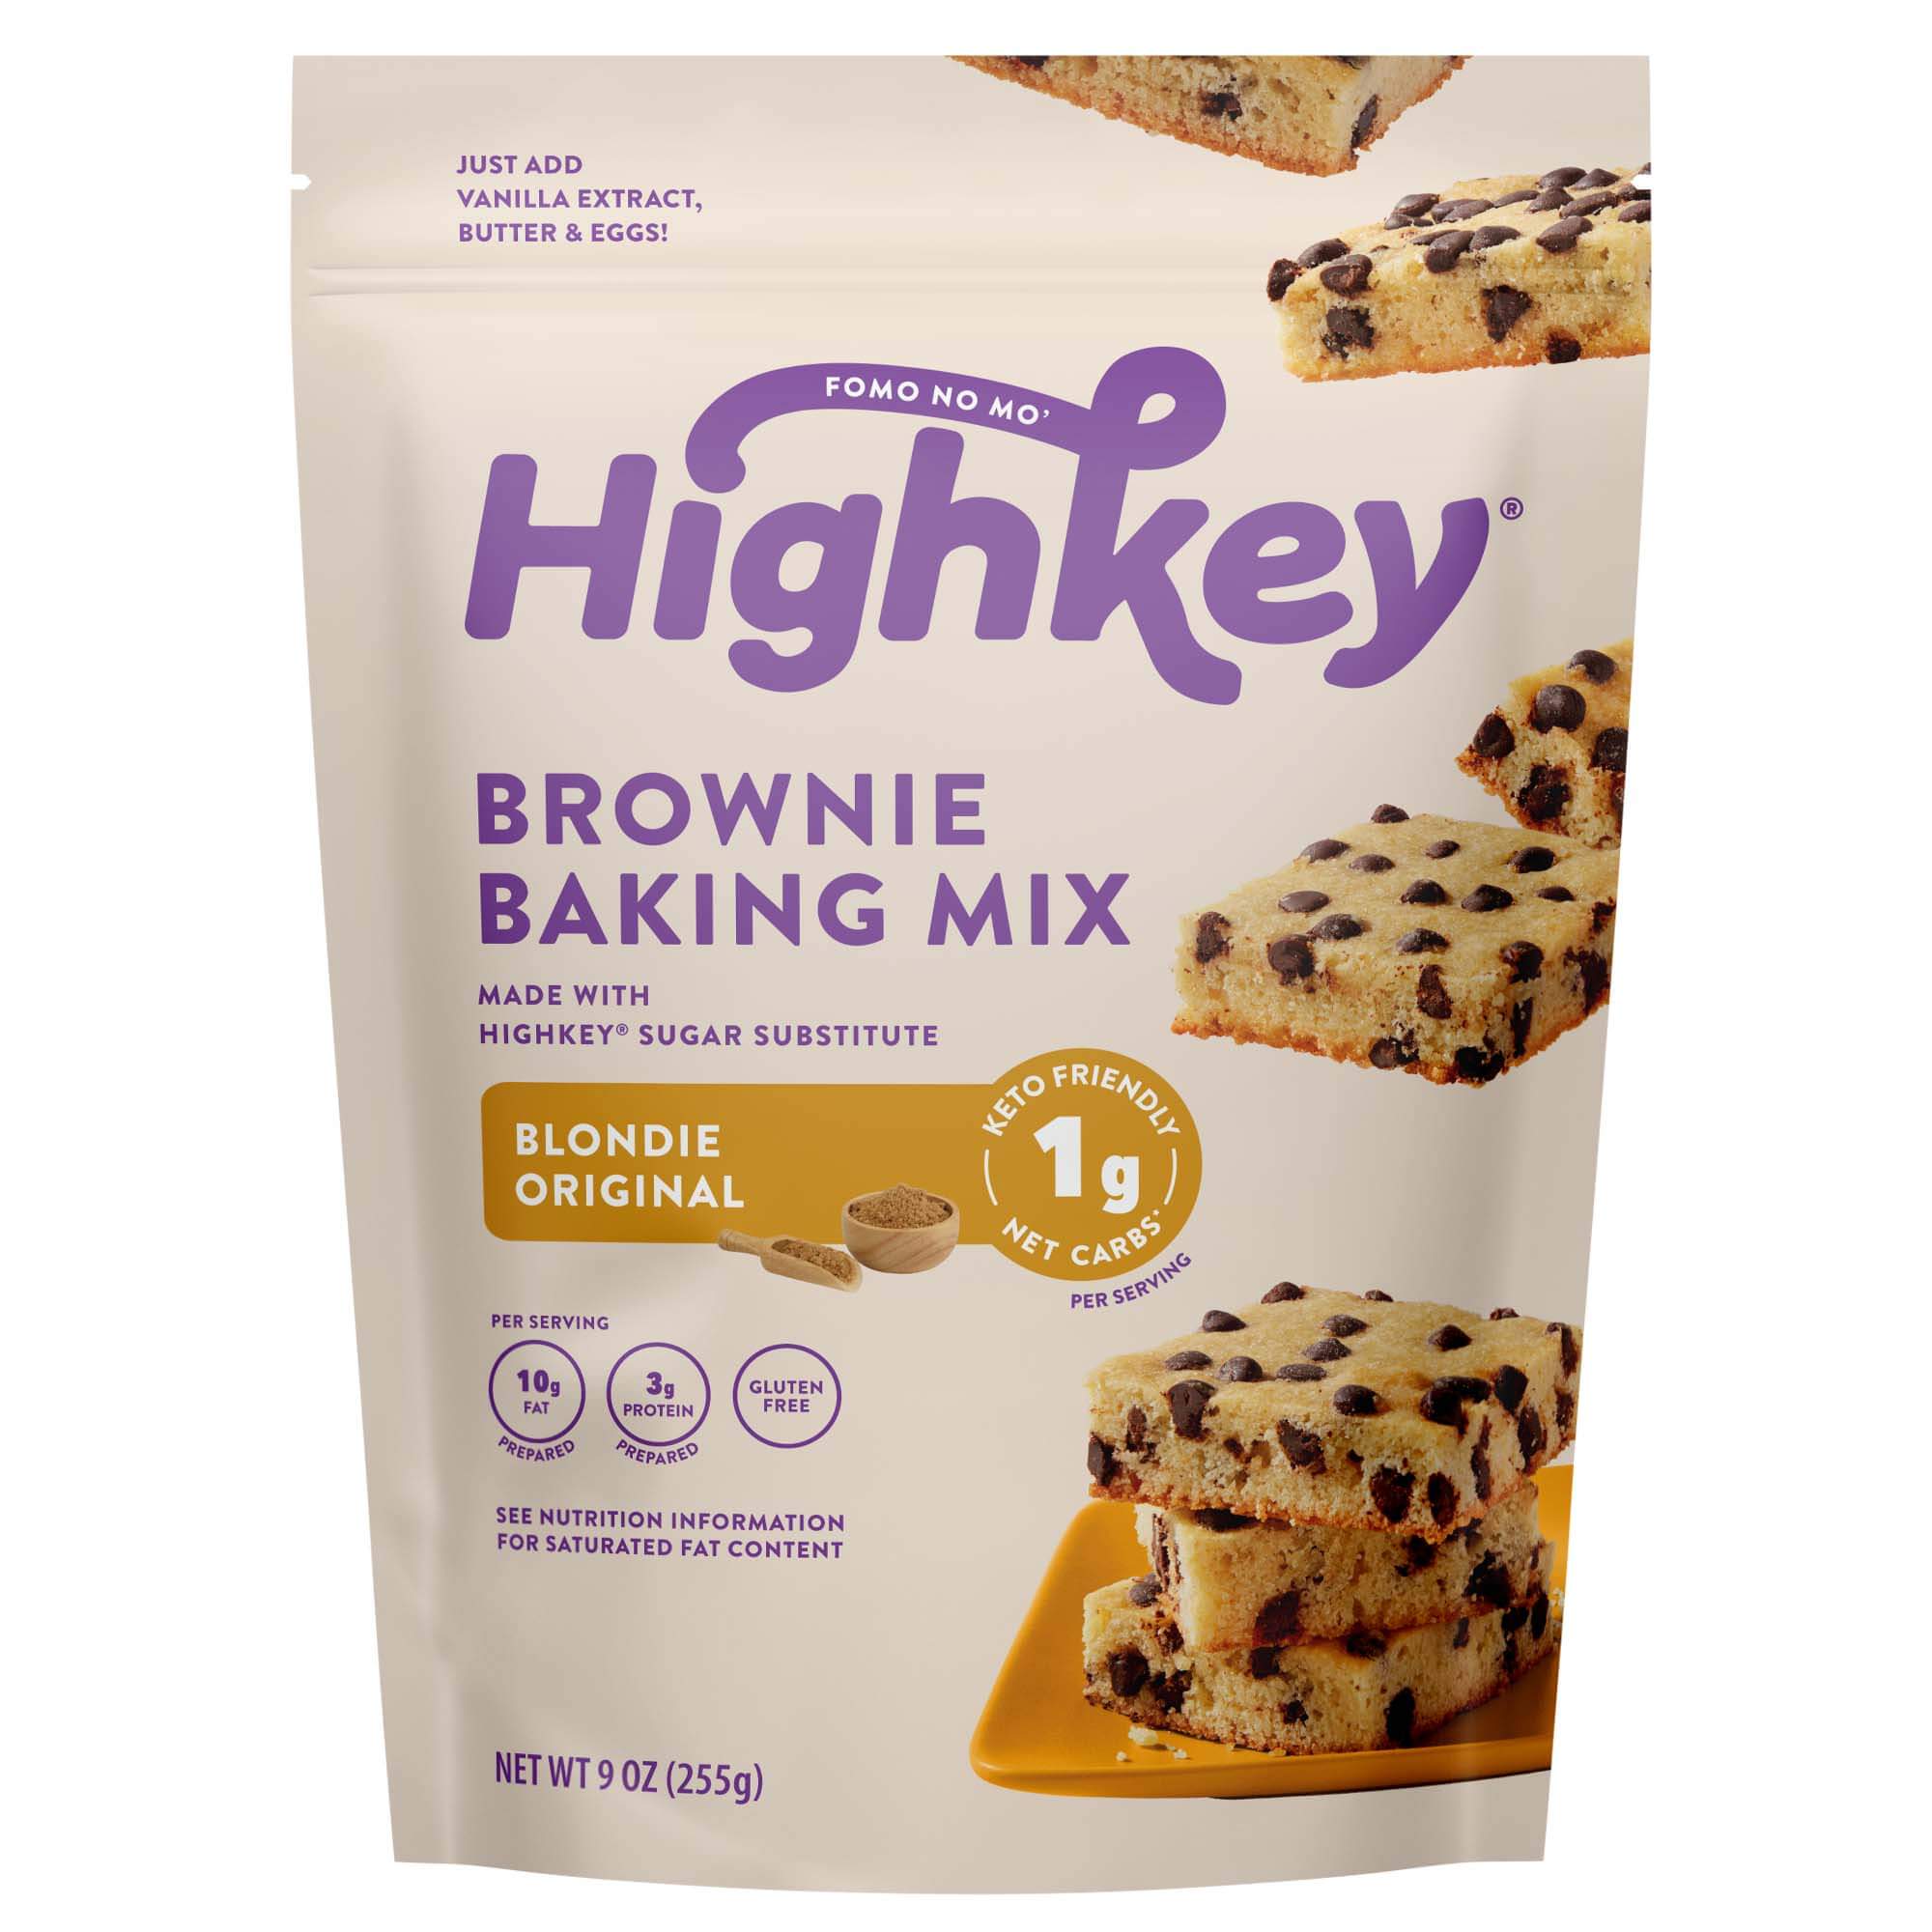 HighKey baking mix